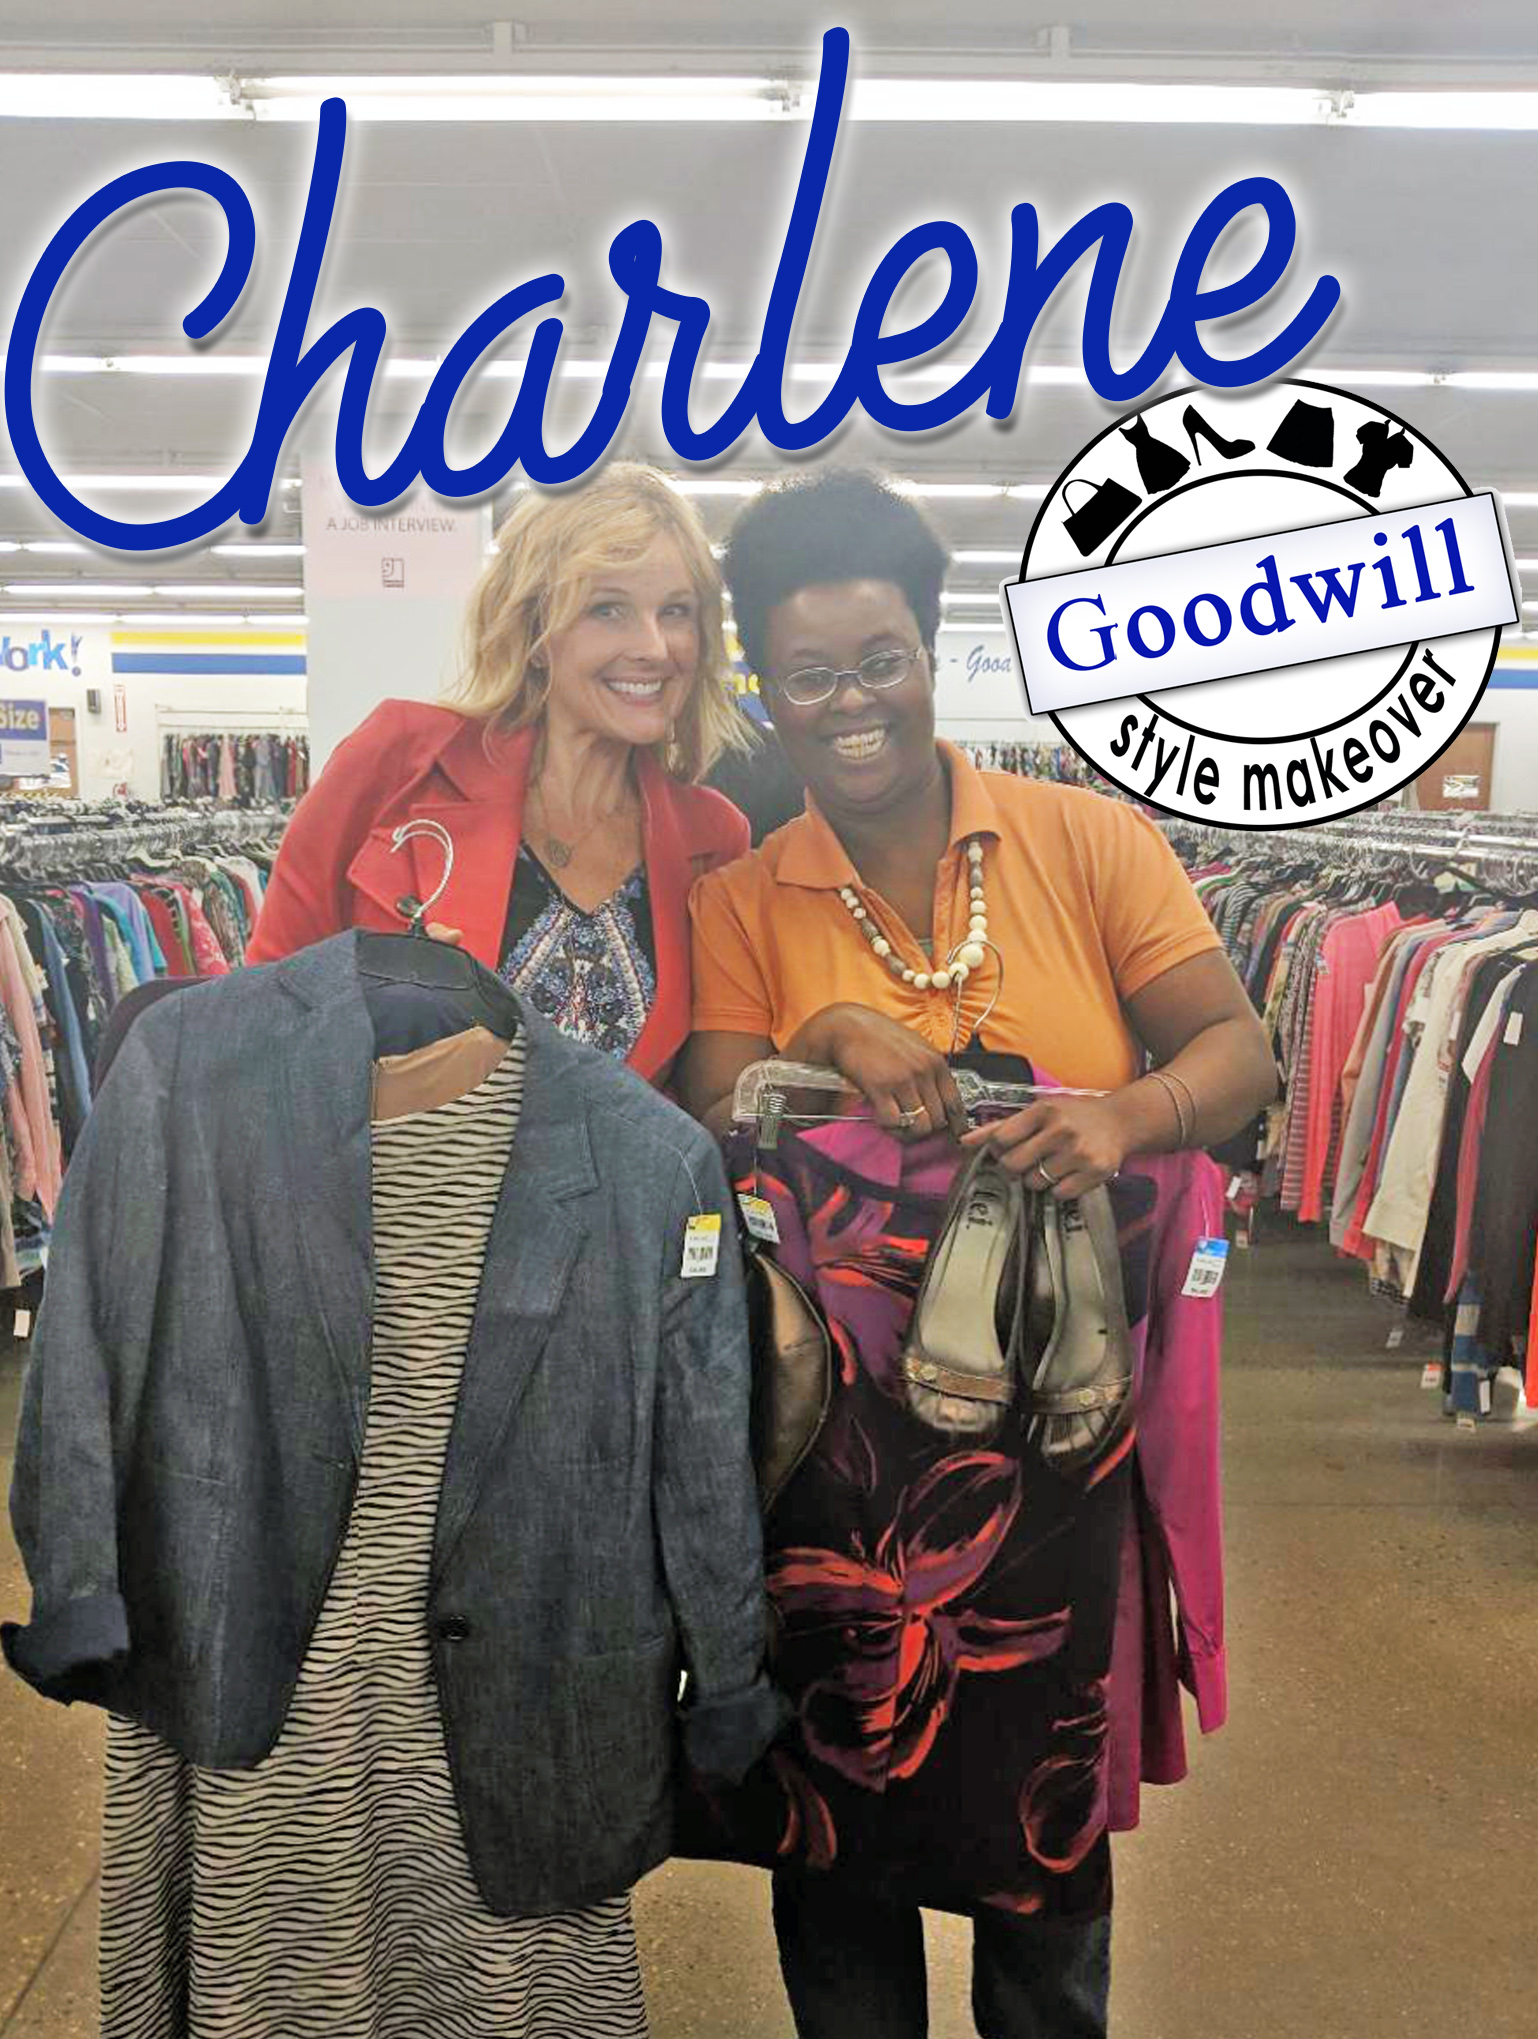 Goodwill Style Makeover – Charlene